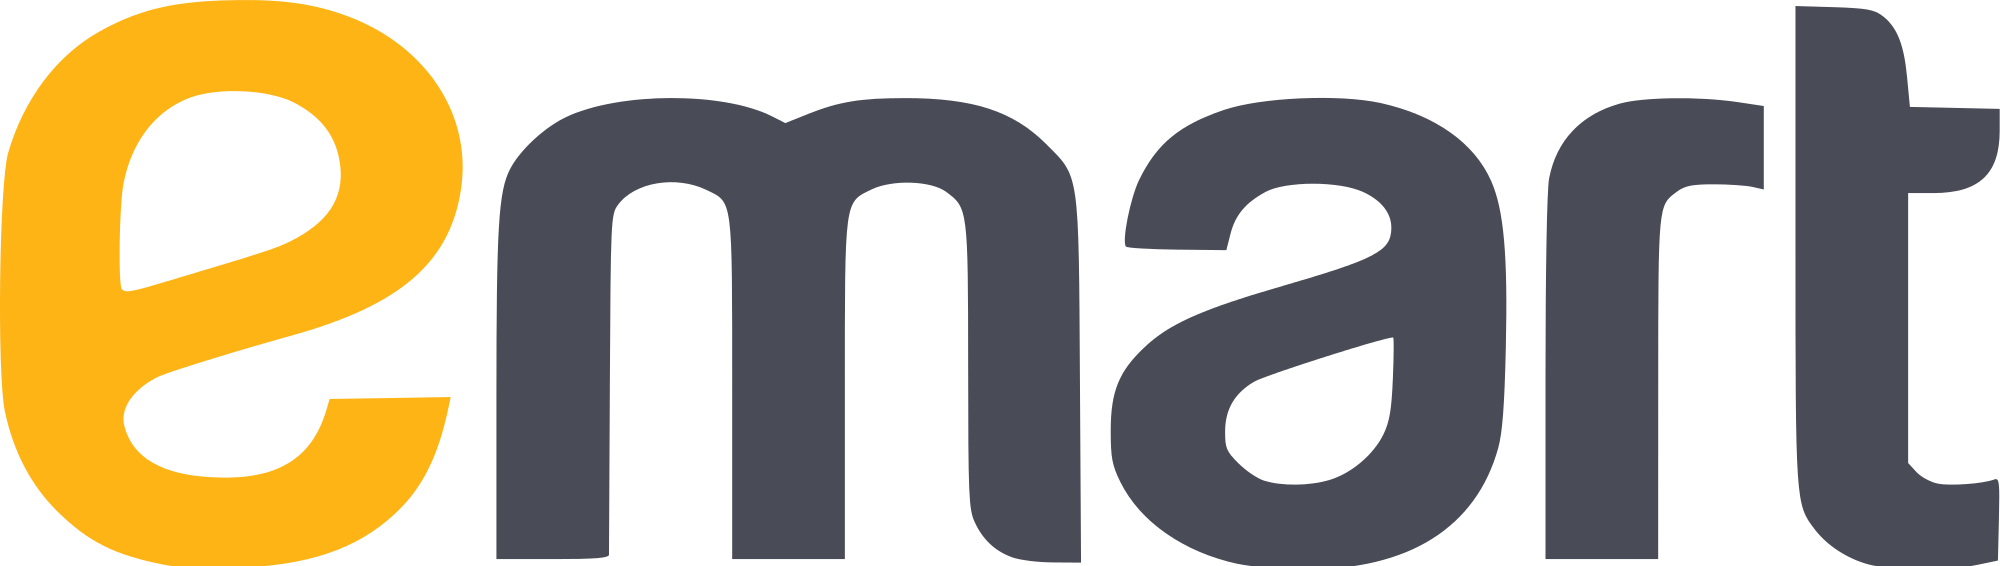 Shinsegae Brand Logo